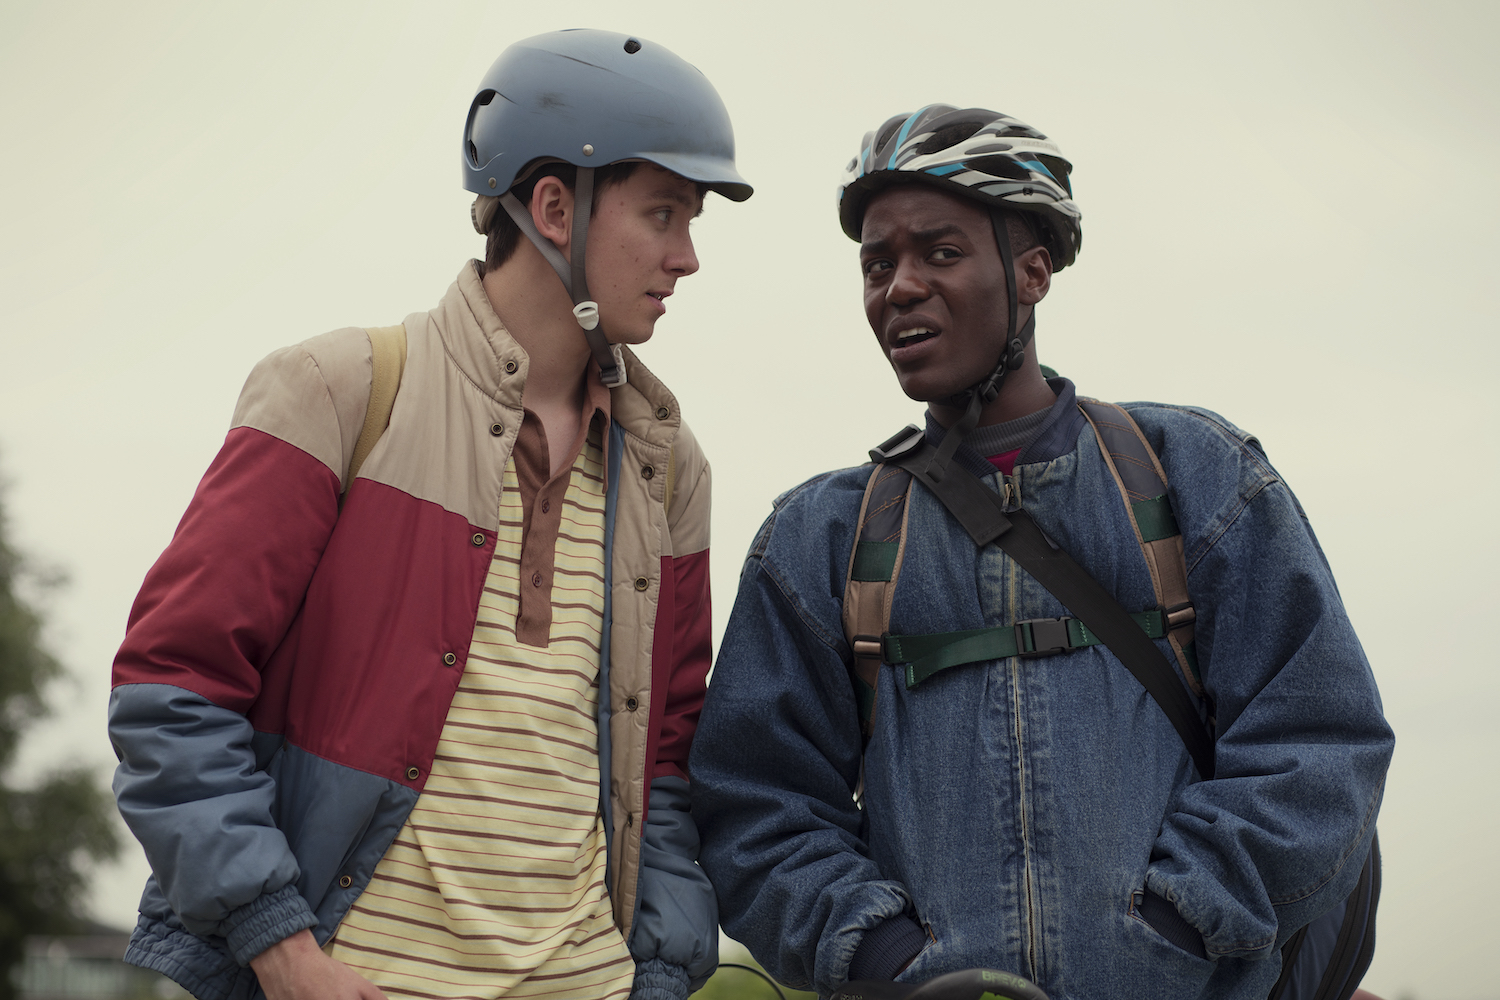 closeup of the teens wearing helmets